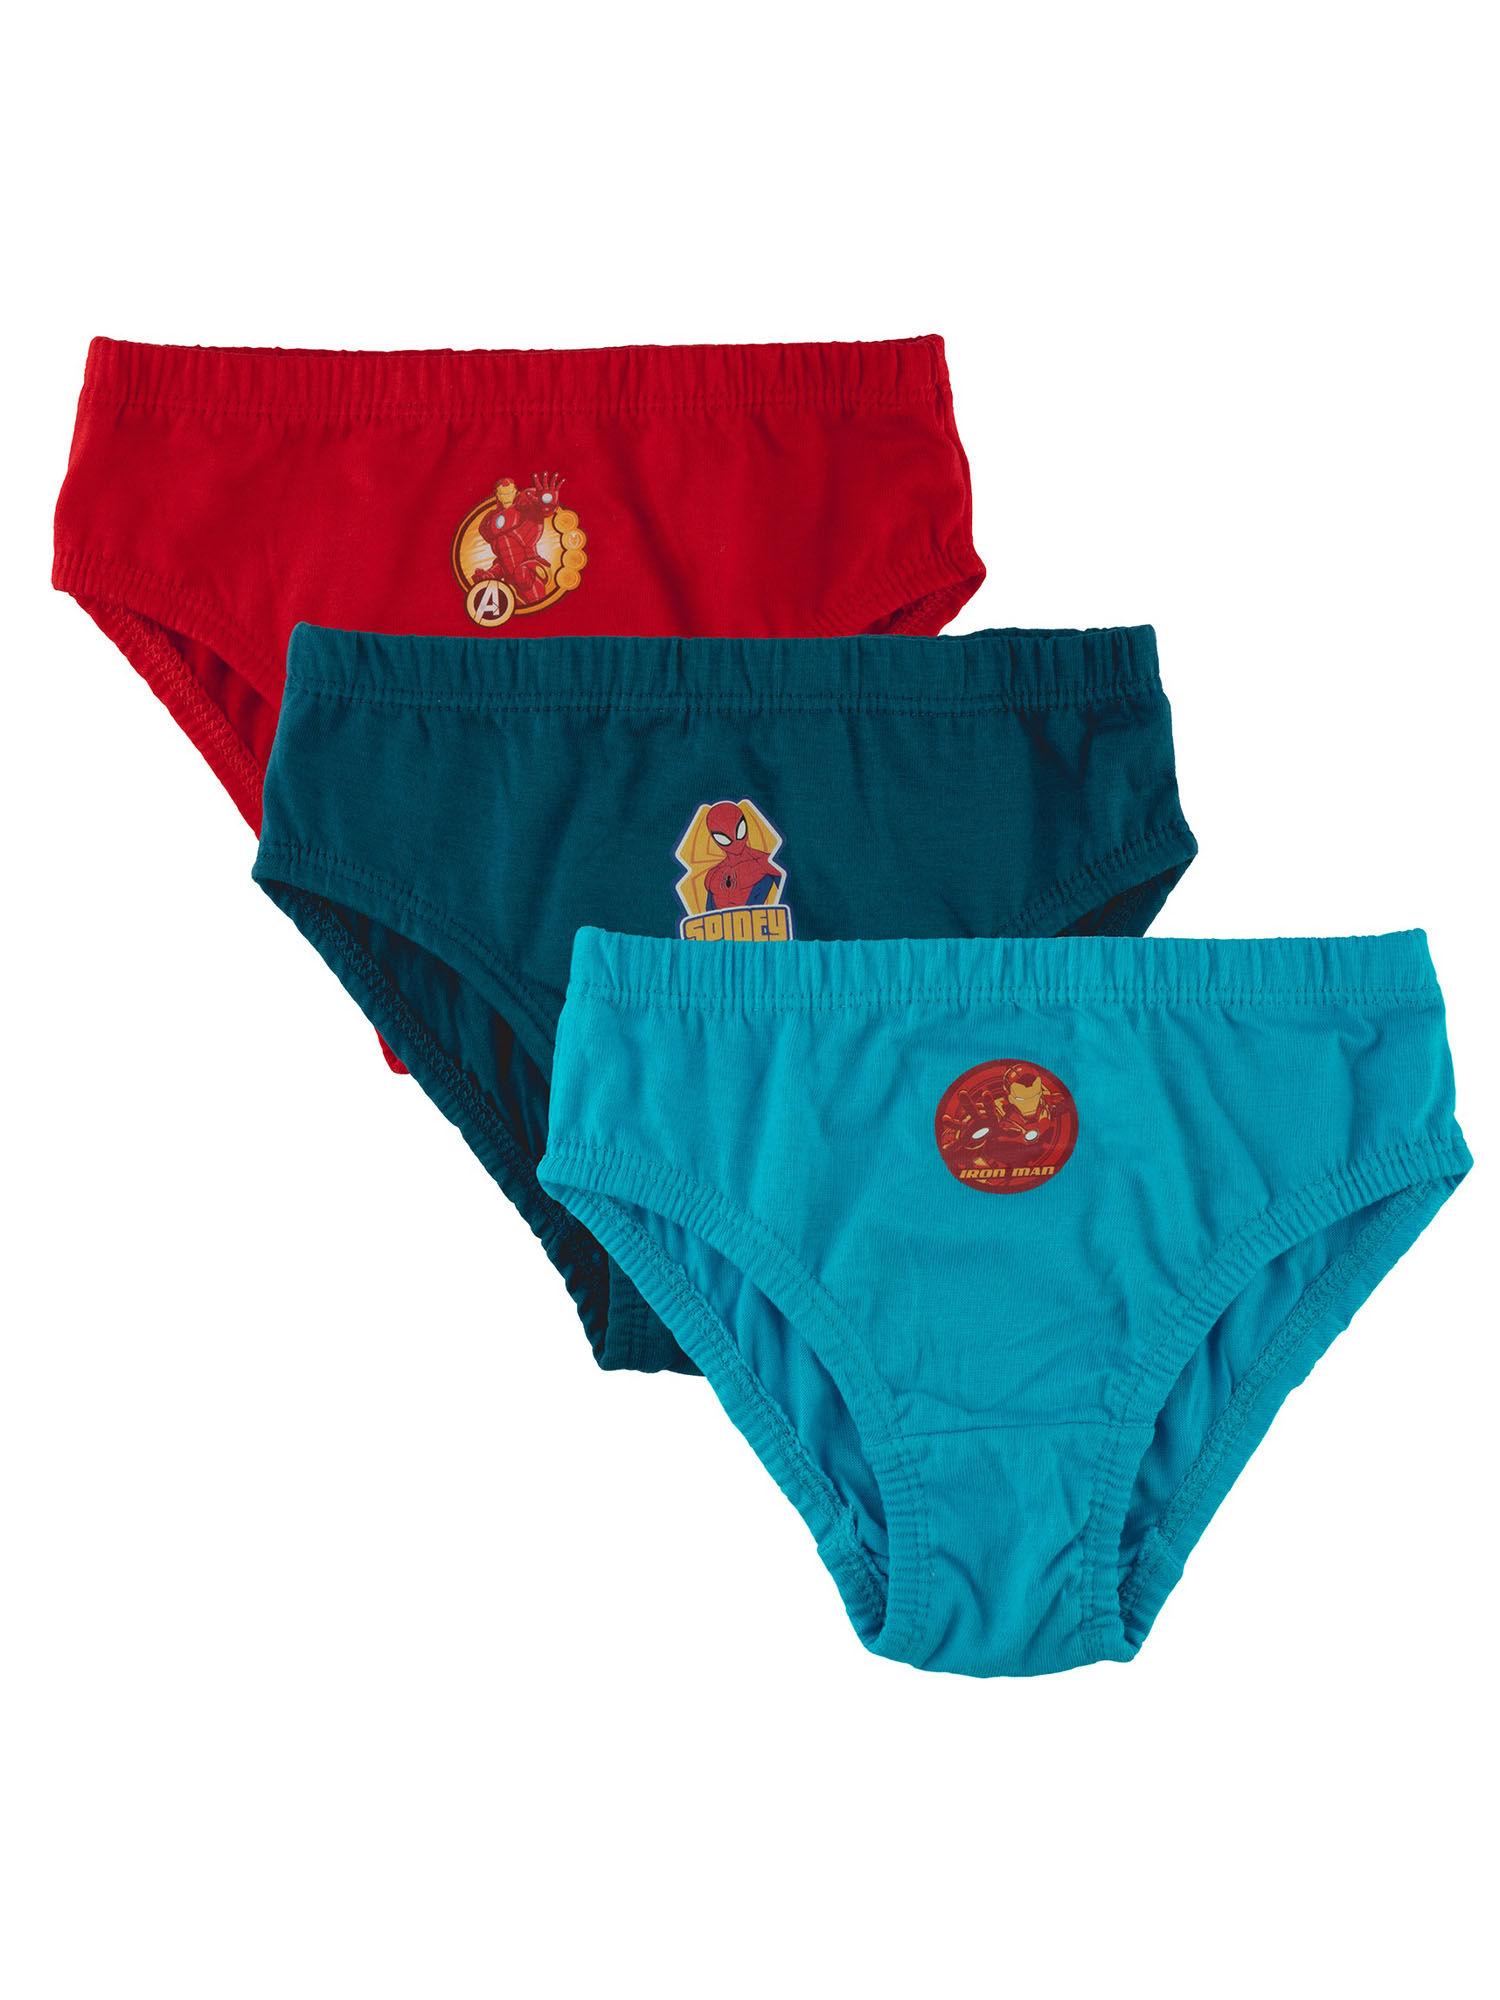 boys-iron-man-printed-brief-underwear-innerwear-multicolor-(pack-of-3)